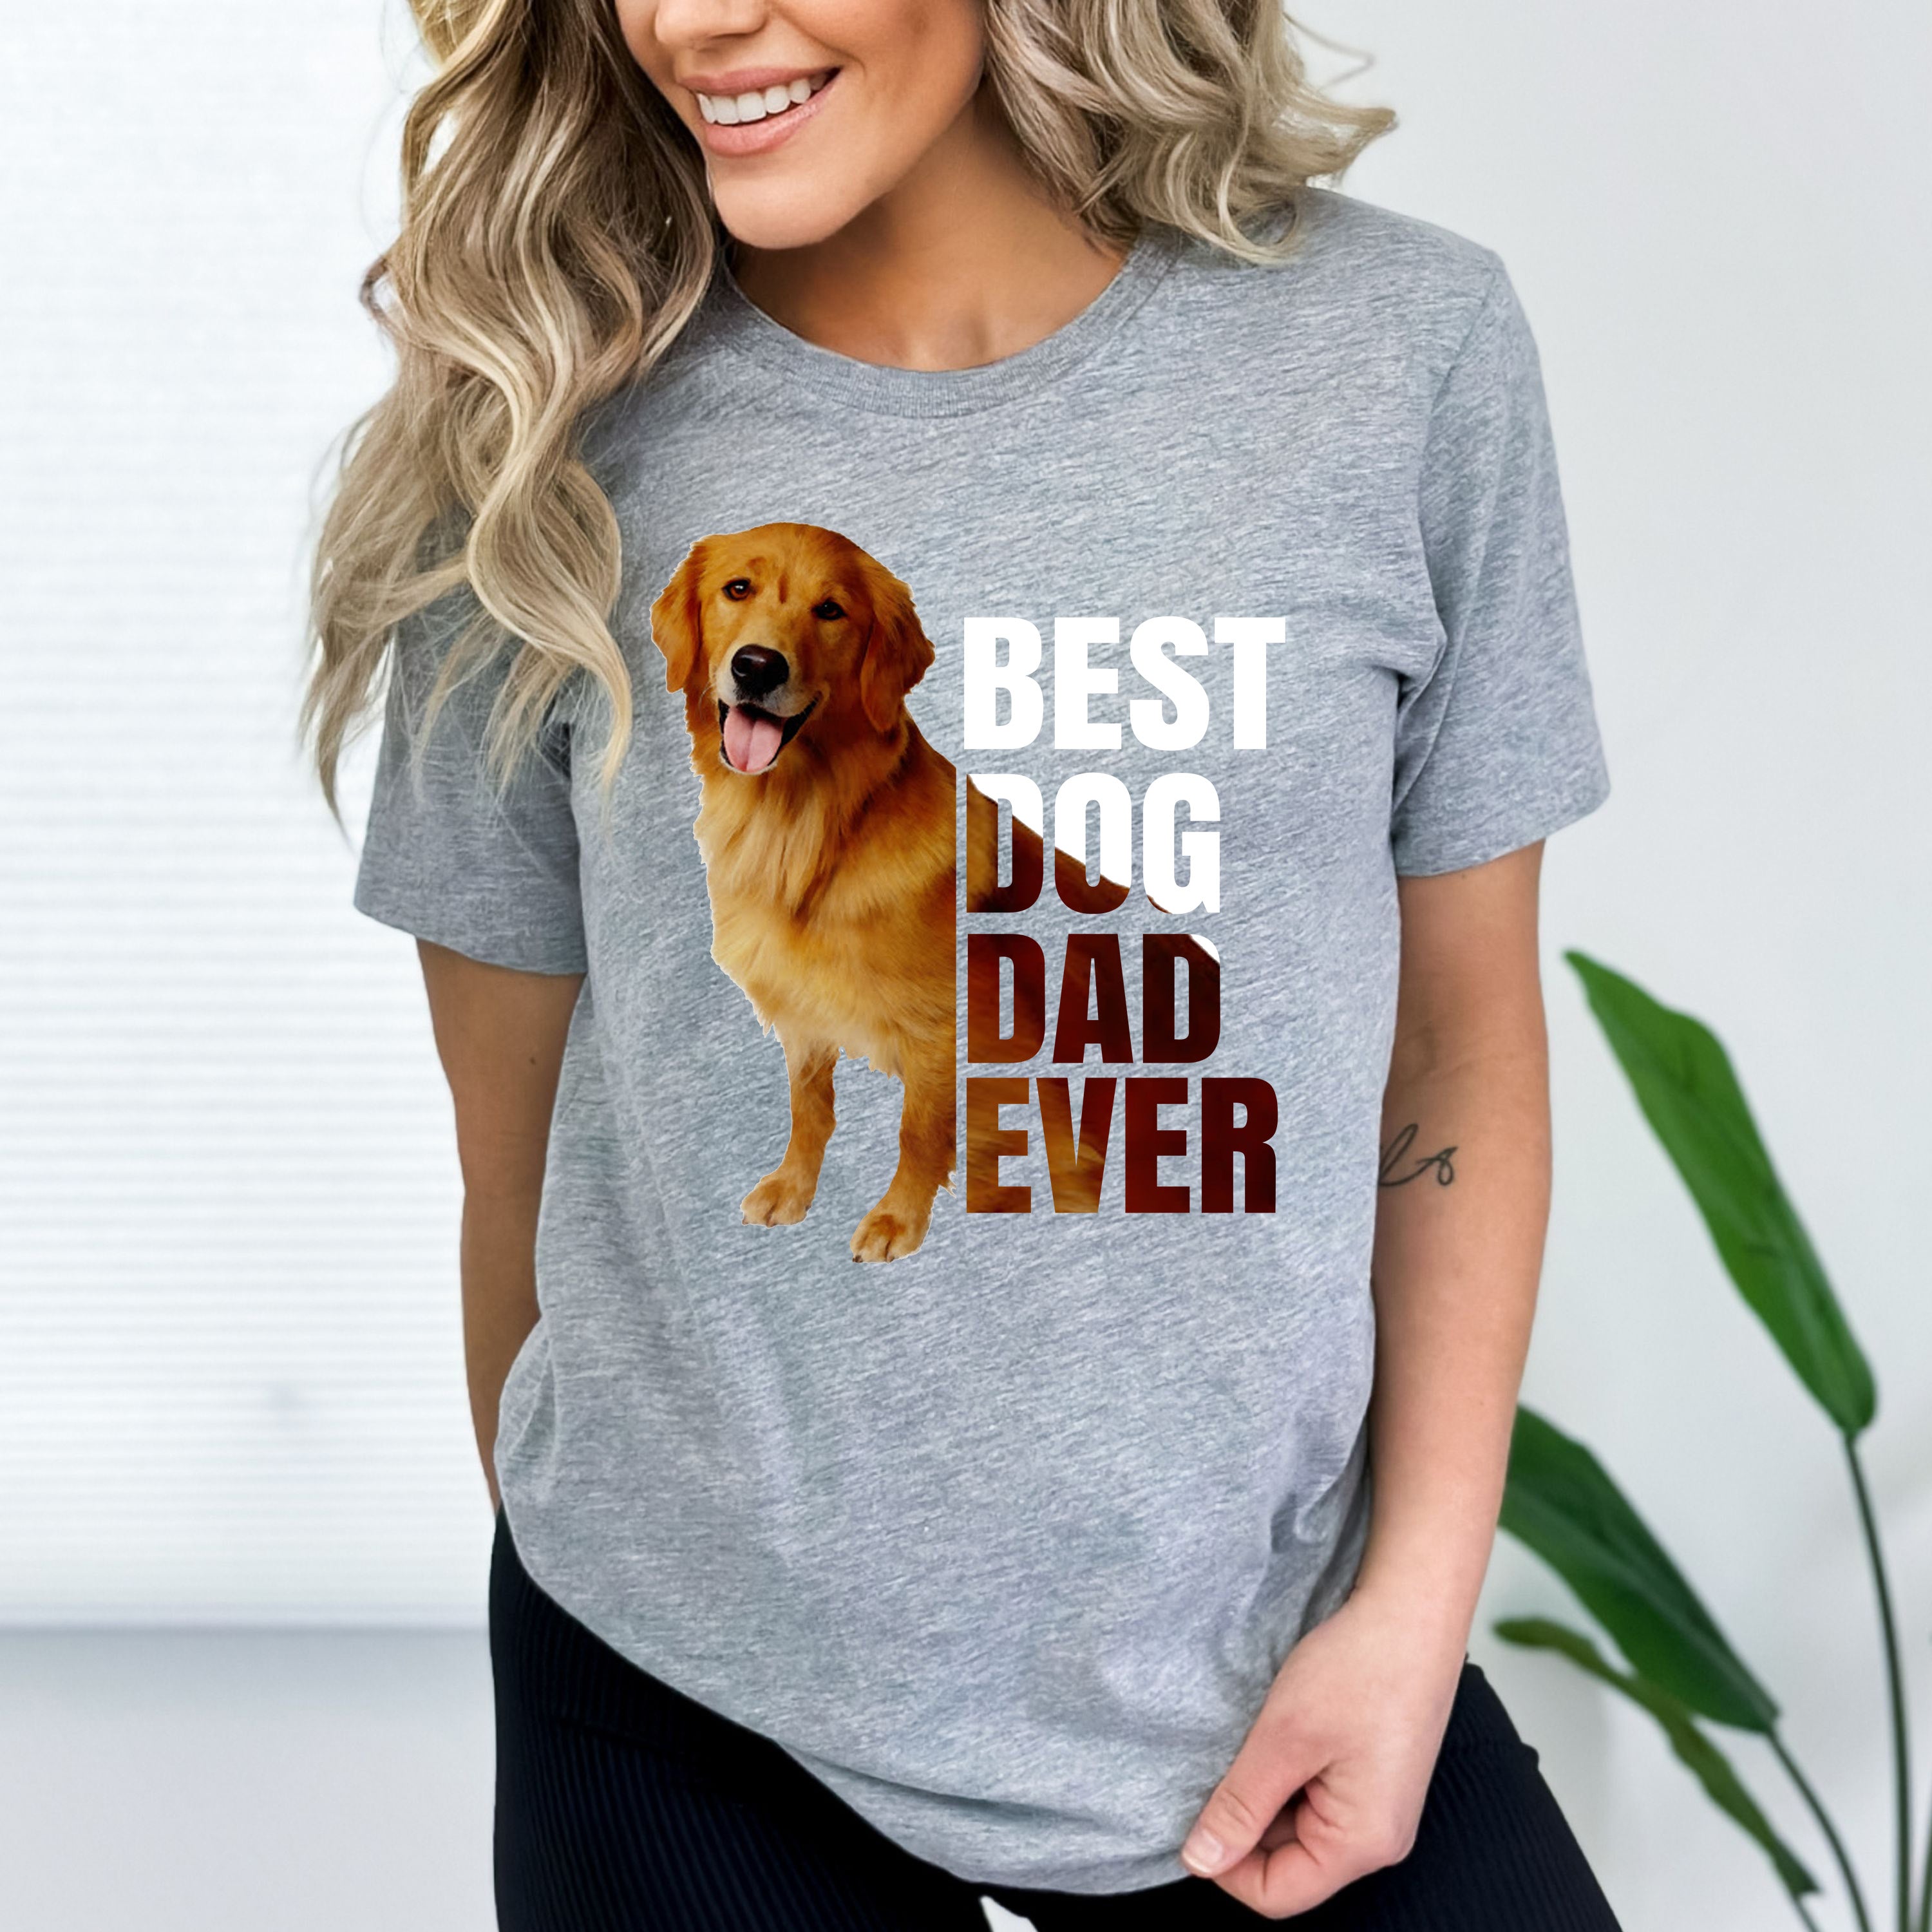 ''BEST DOG DAD EVER''